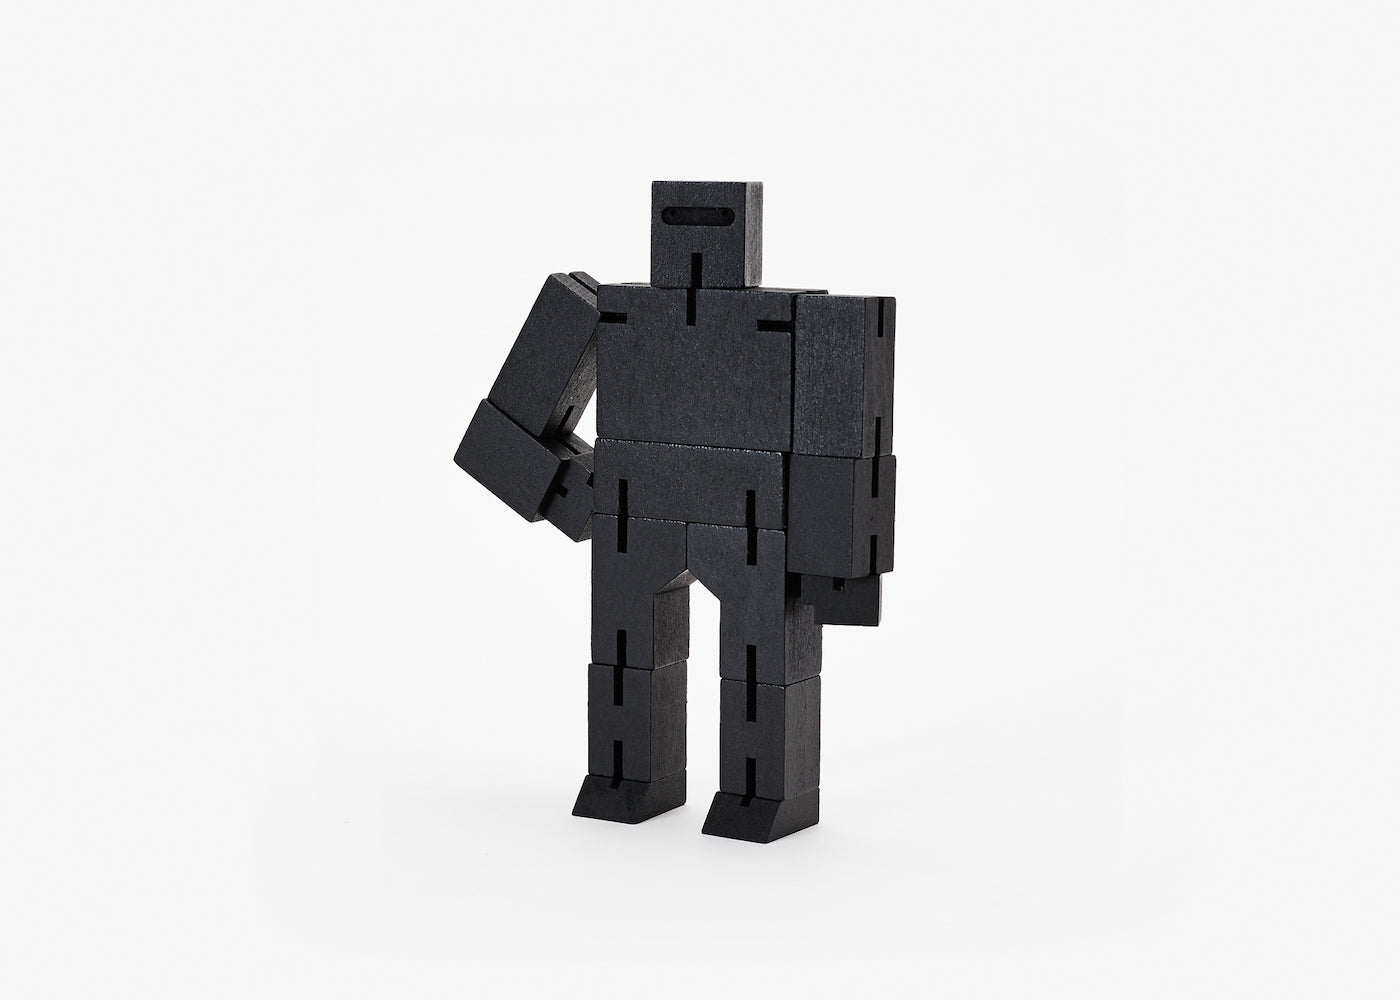 Cubebot - Small - Black